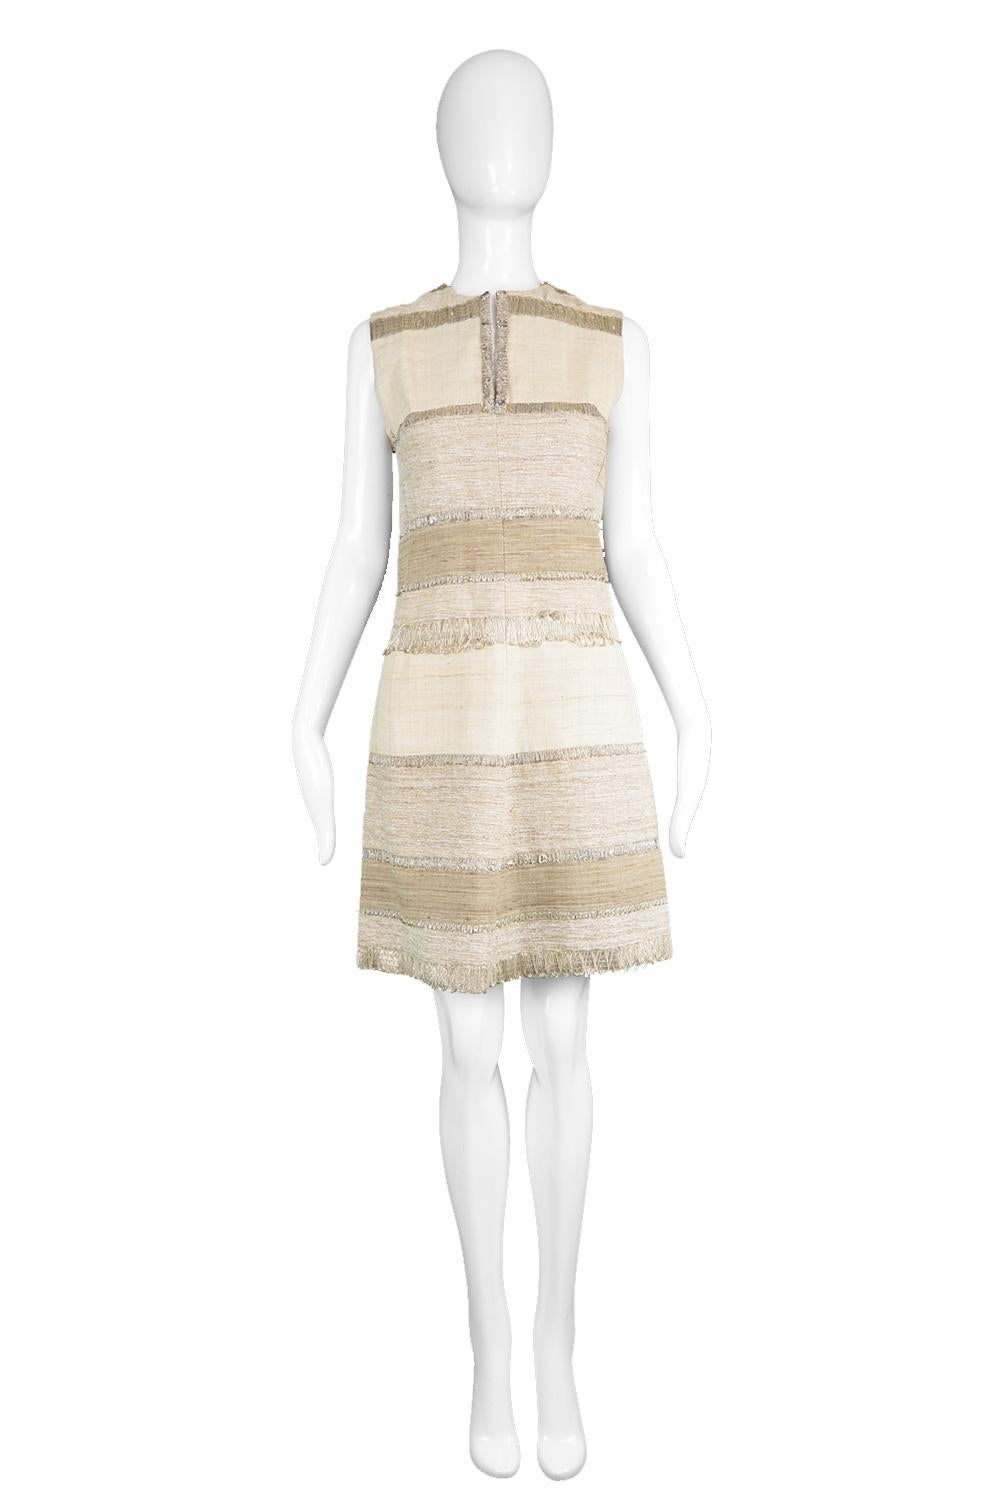 Vintage 1960s Textured Linen & Metallic Cocktail Party Sleeveless Dress

Estimated Size: UK 10/ US 6/ EU 38. Click 'Continue Reading' to see measurements and description. 
Bust - 34” / 86cm
Waist - 28” / 71cm
Hips - 38” / 96cm
Length (Shoulder to